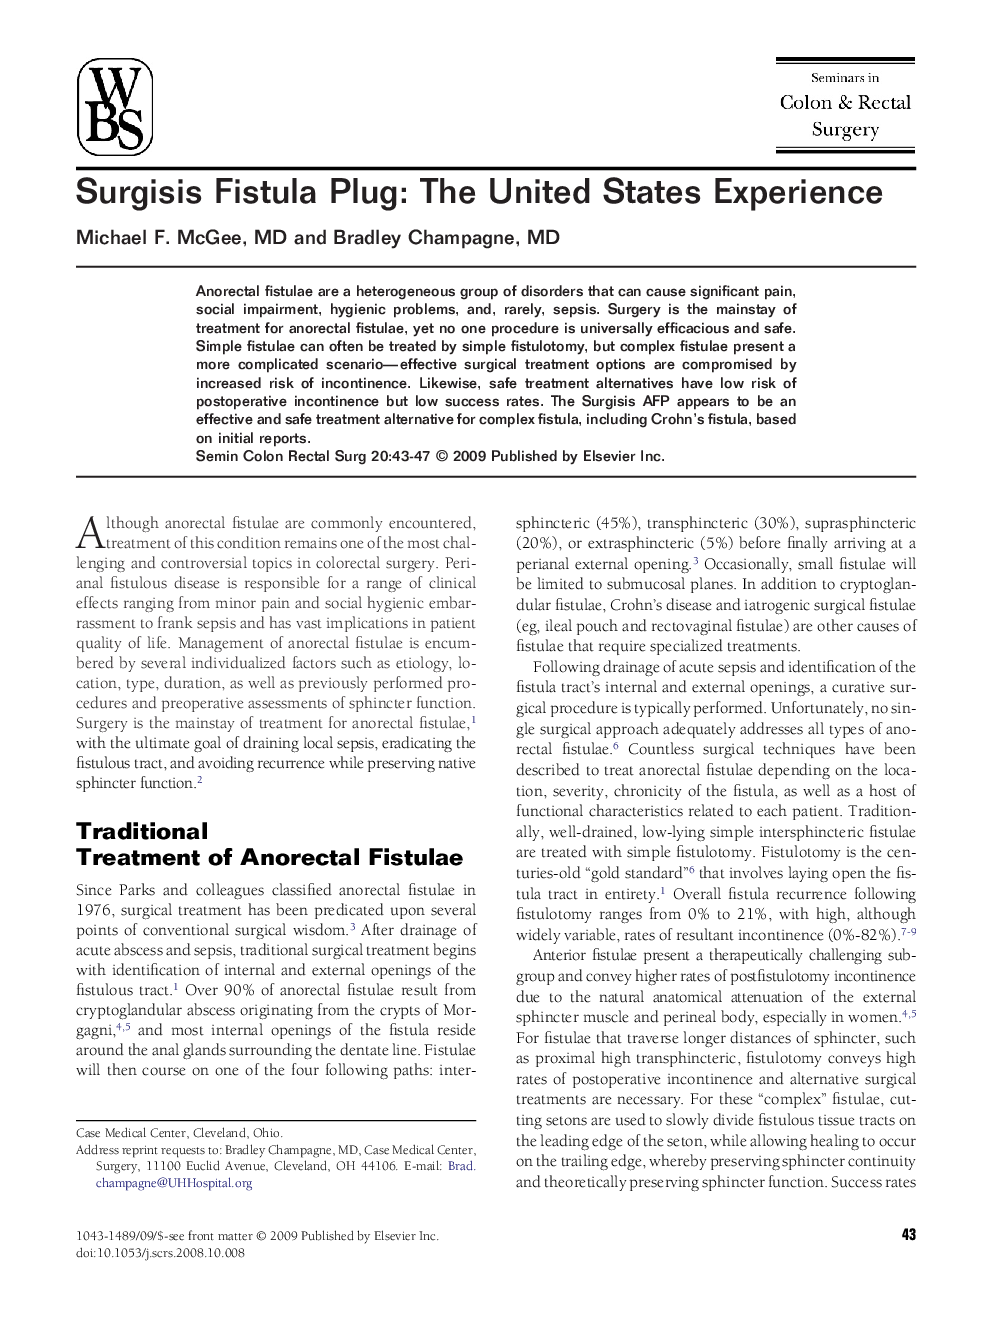 Surgisis Fistula Plug: The United States Experience